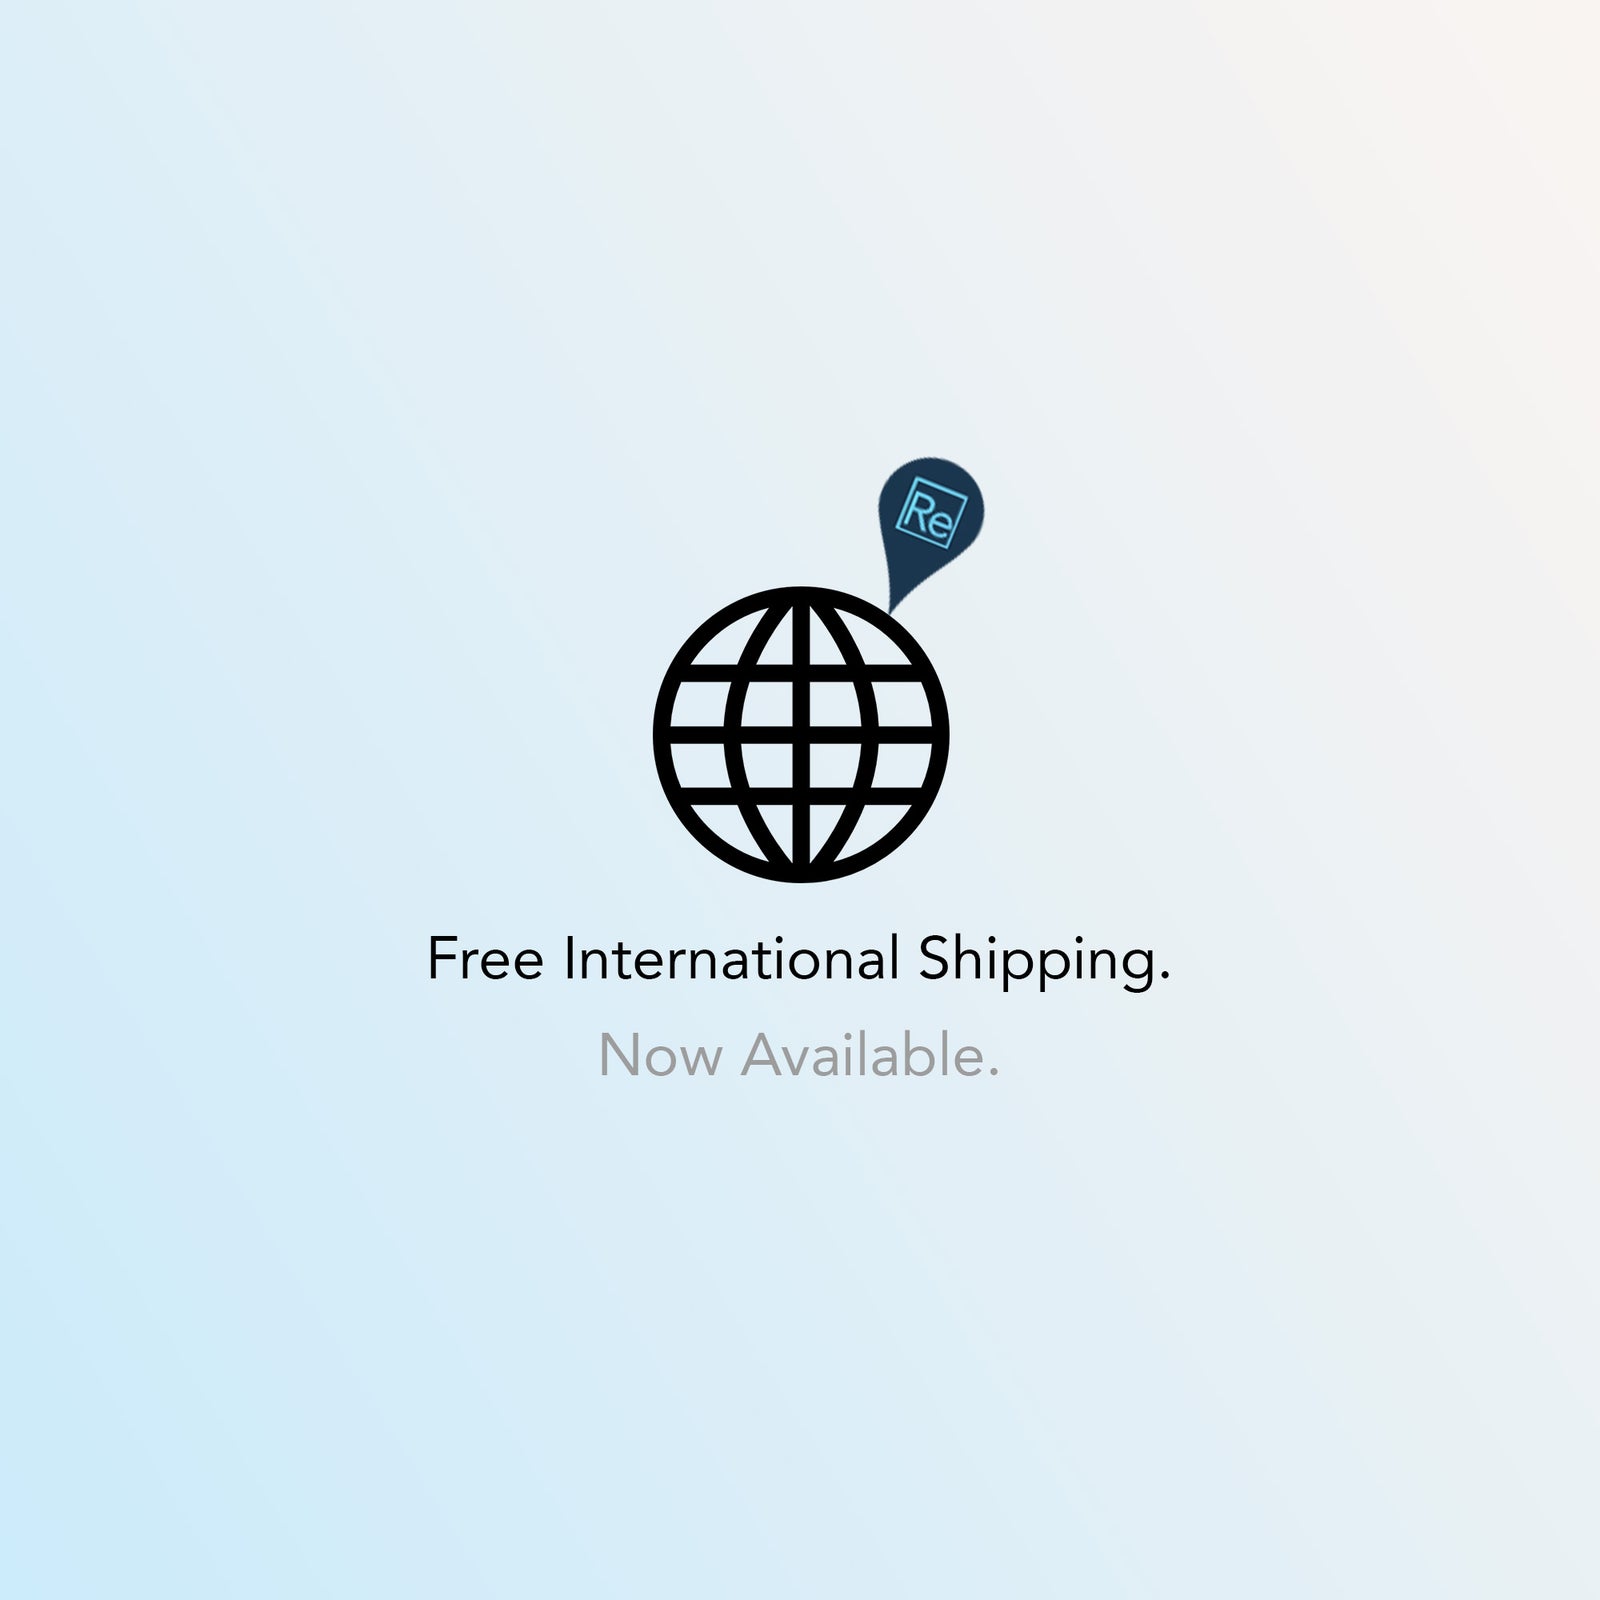 Free Shipping Internationally. 全球免運費